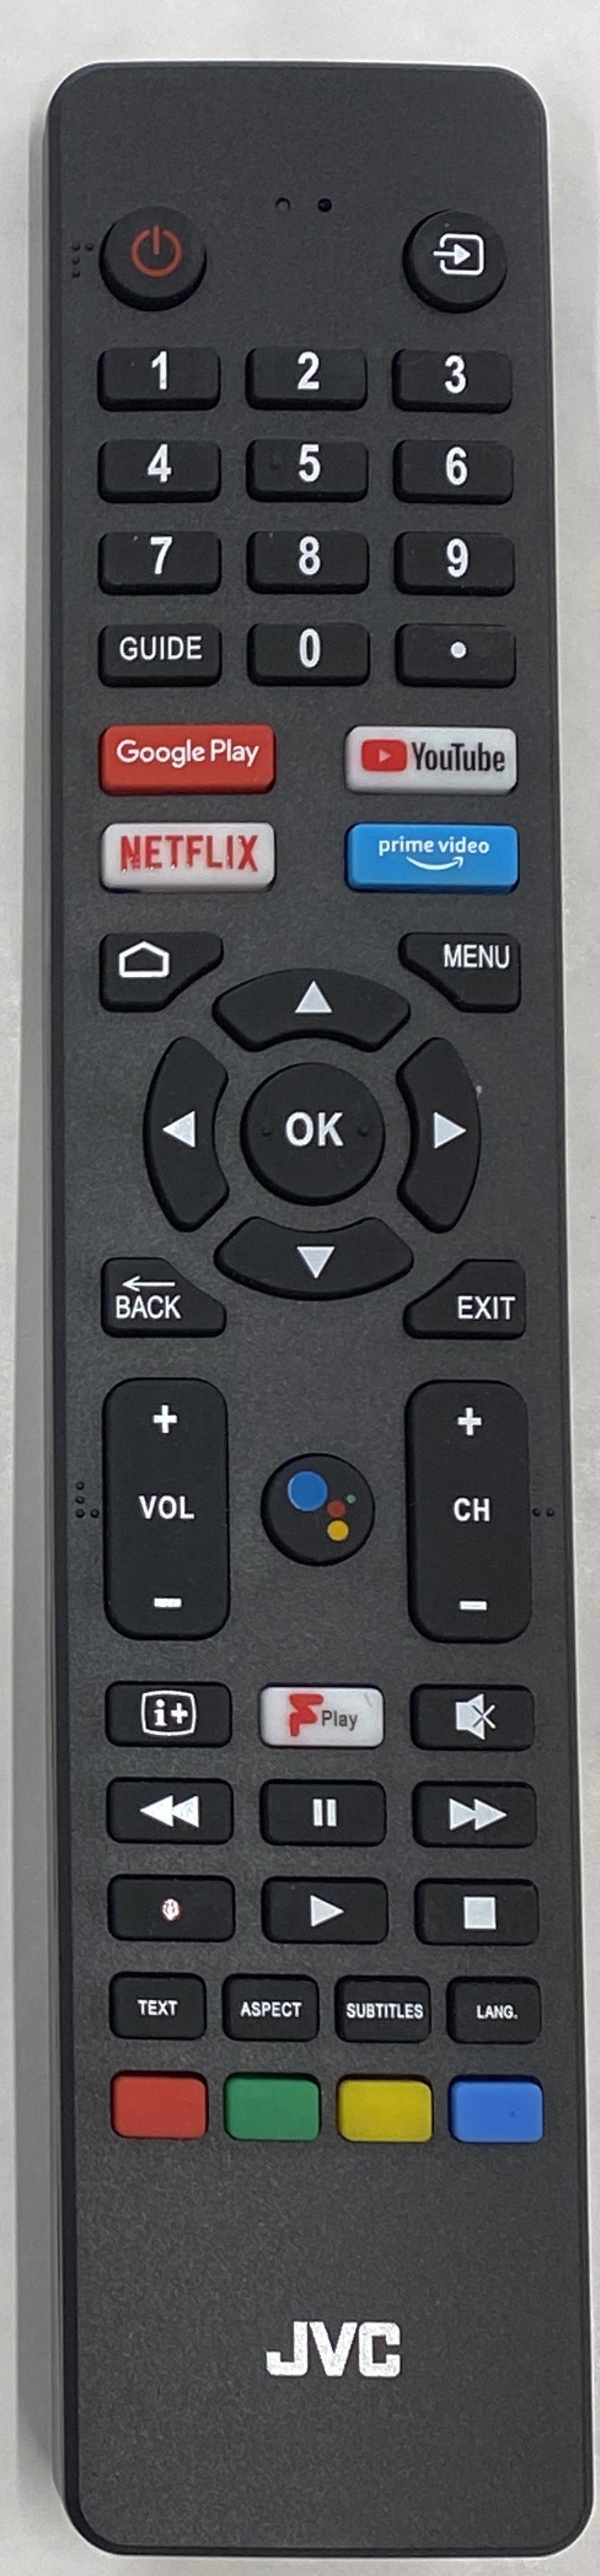 JVC LT-40CA790 Remote Control Original 